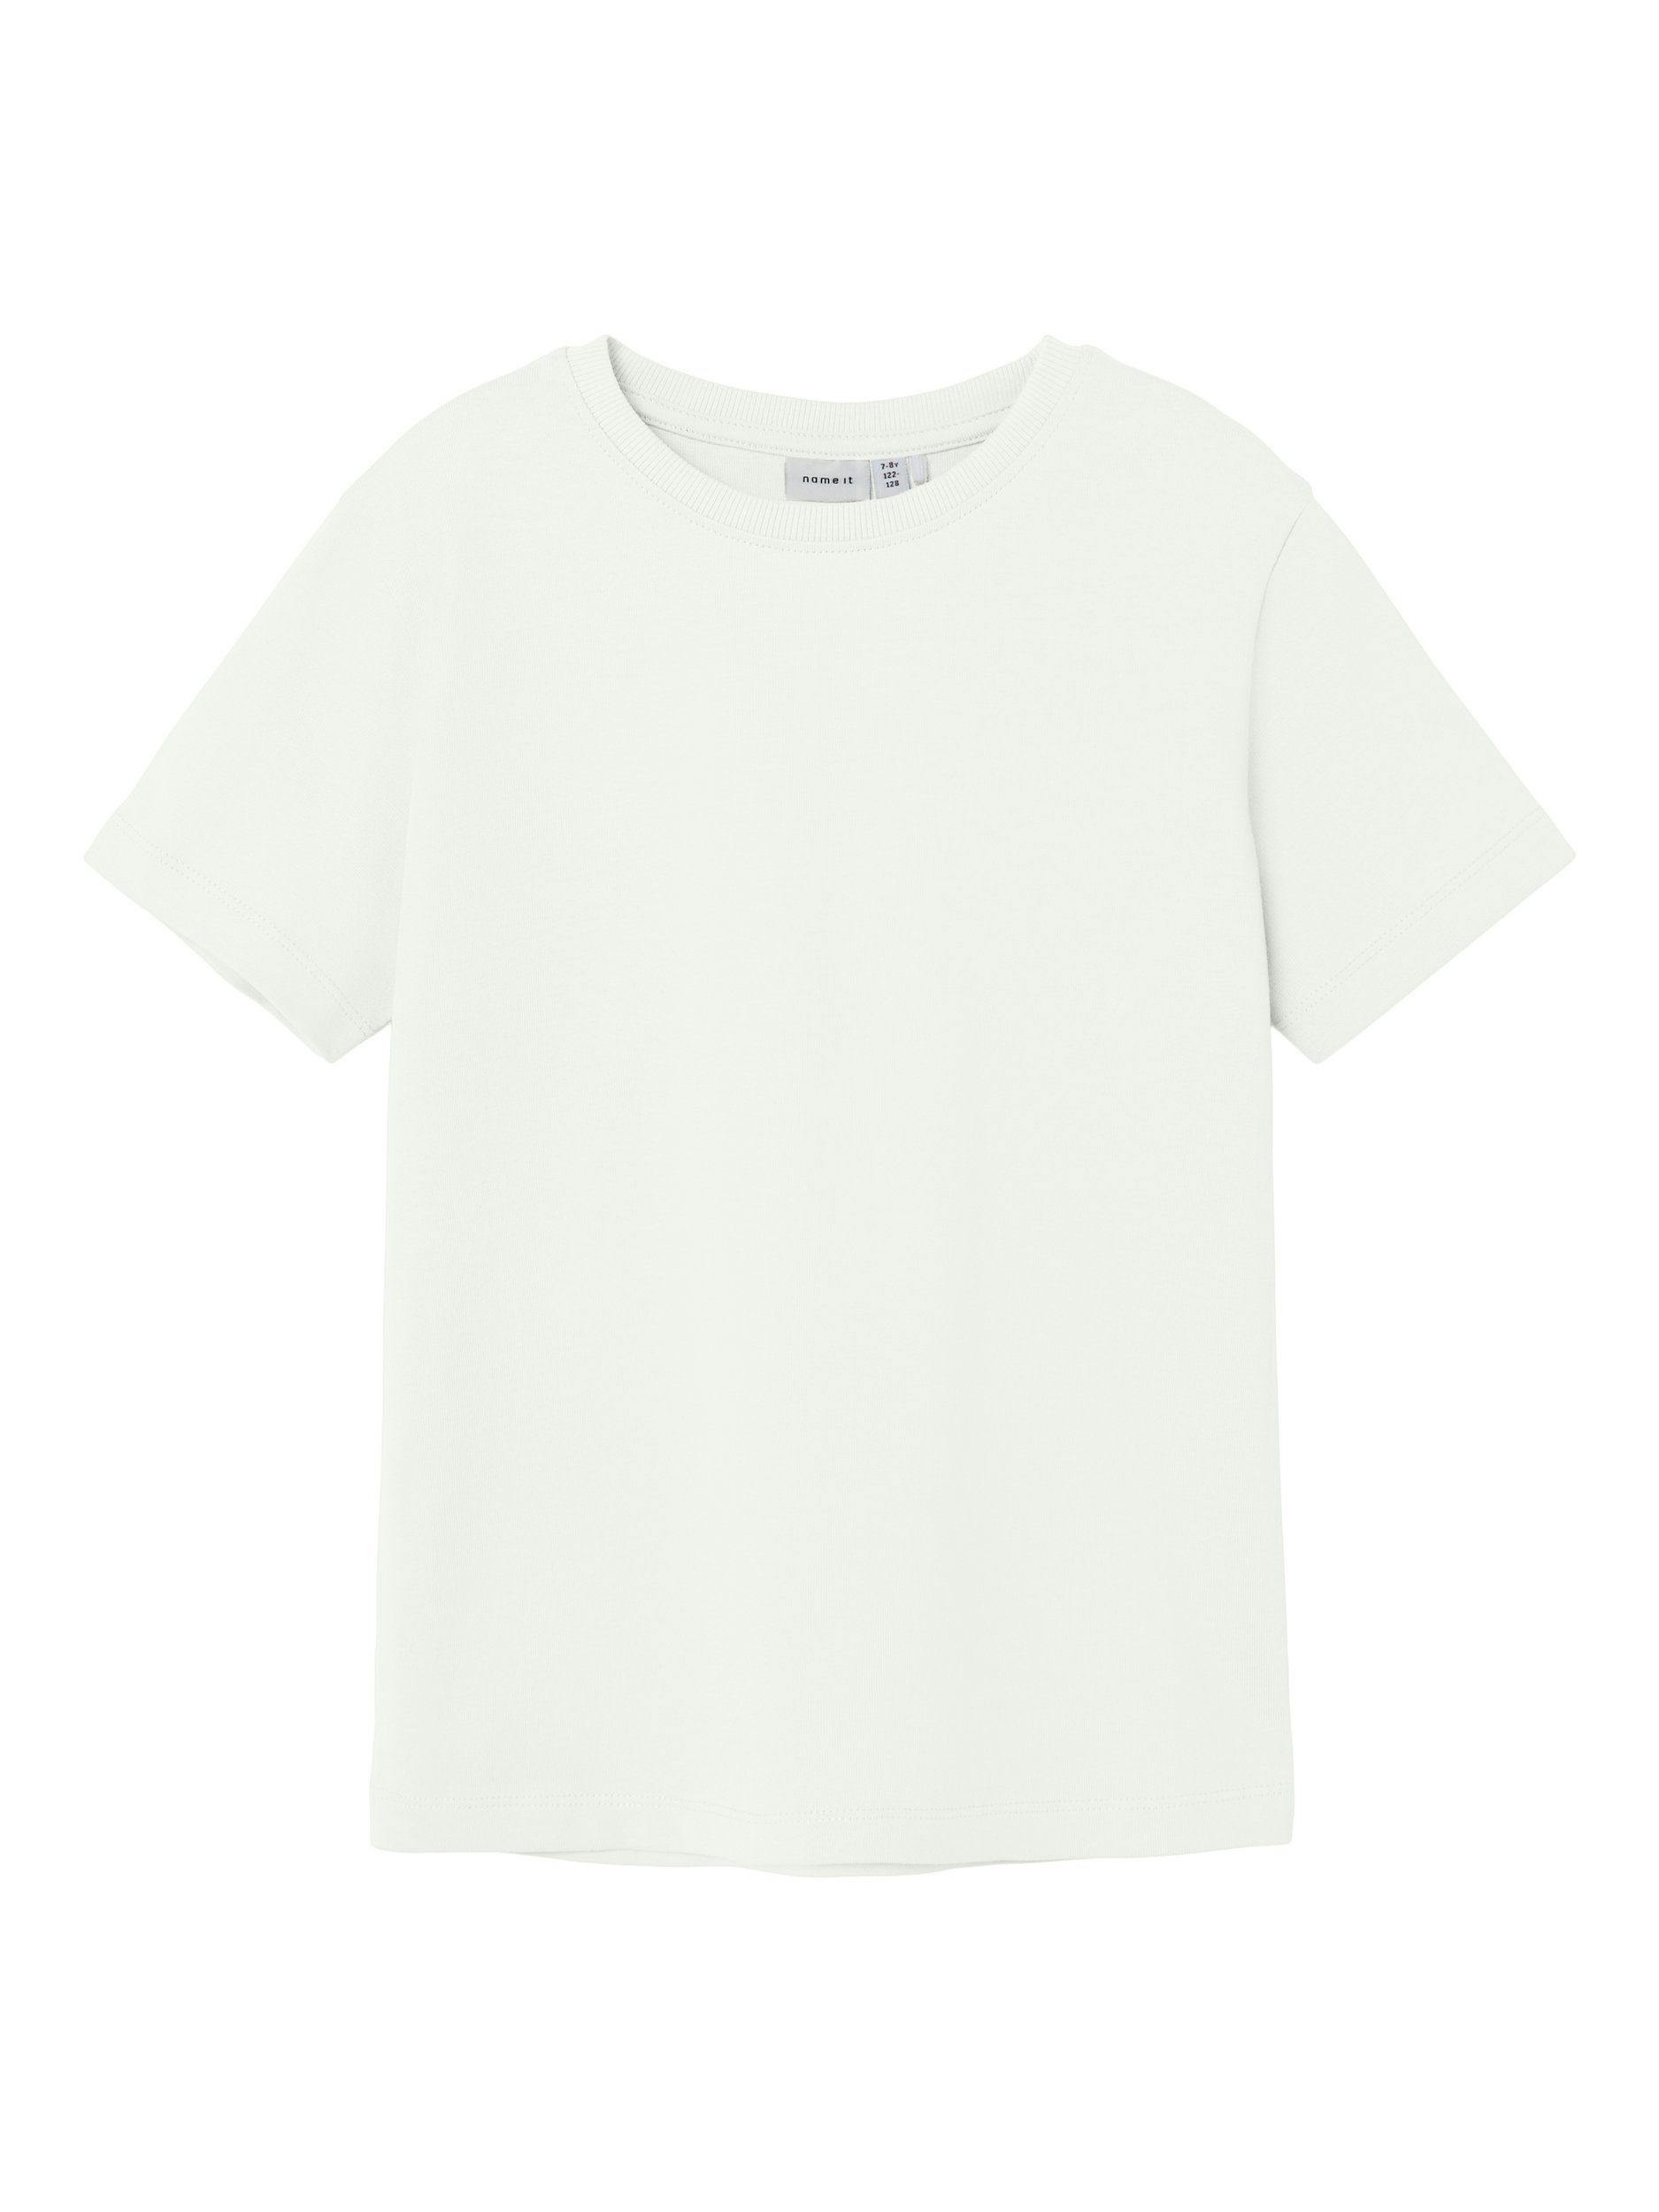 TOP T-Shirt bright Name LOOSE white S/S NKMTORSTEN It